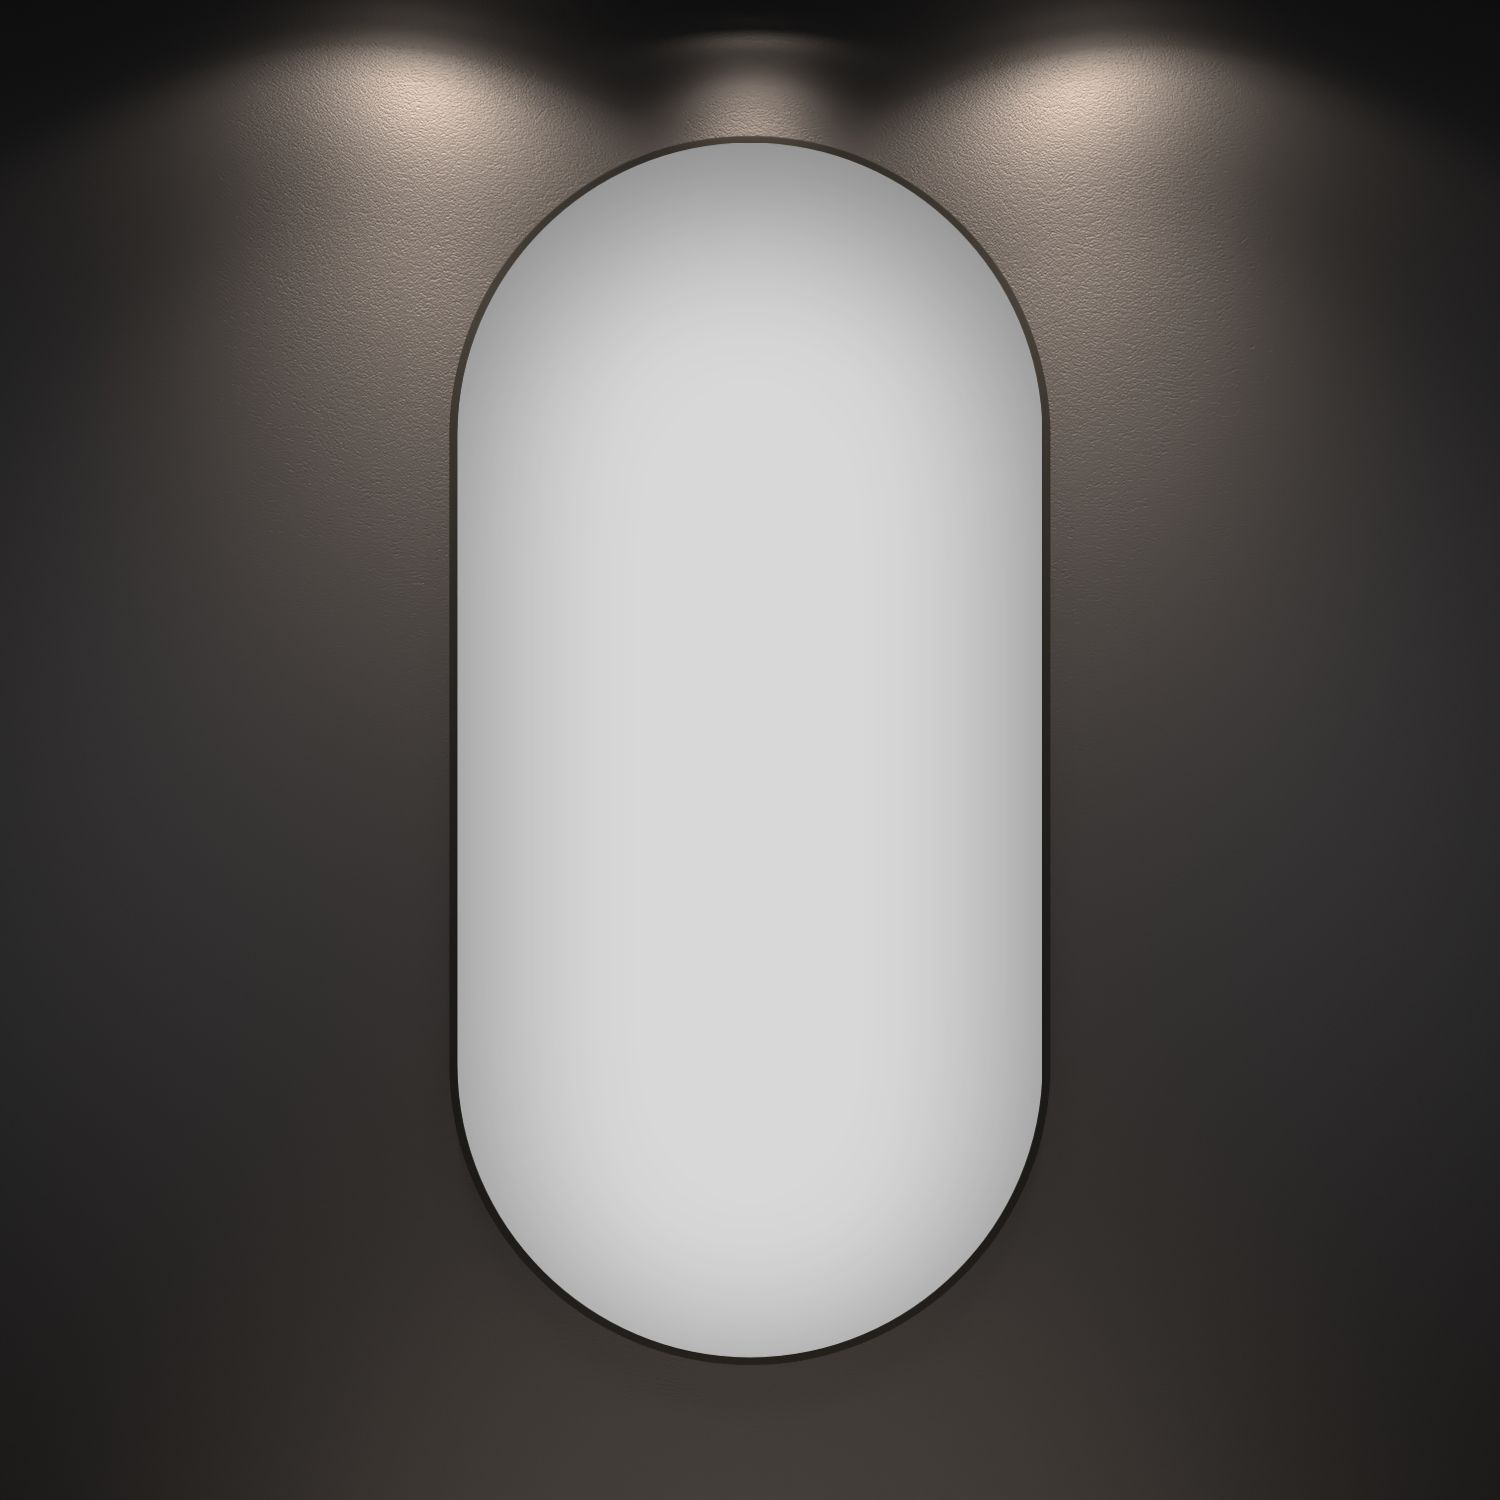 фото Влагостойкое овальное зеркало wellsee 7 rays' spectrum 172201810, размер 45 х 90 см